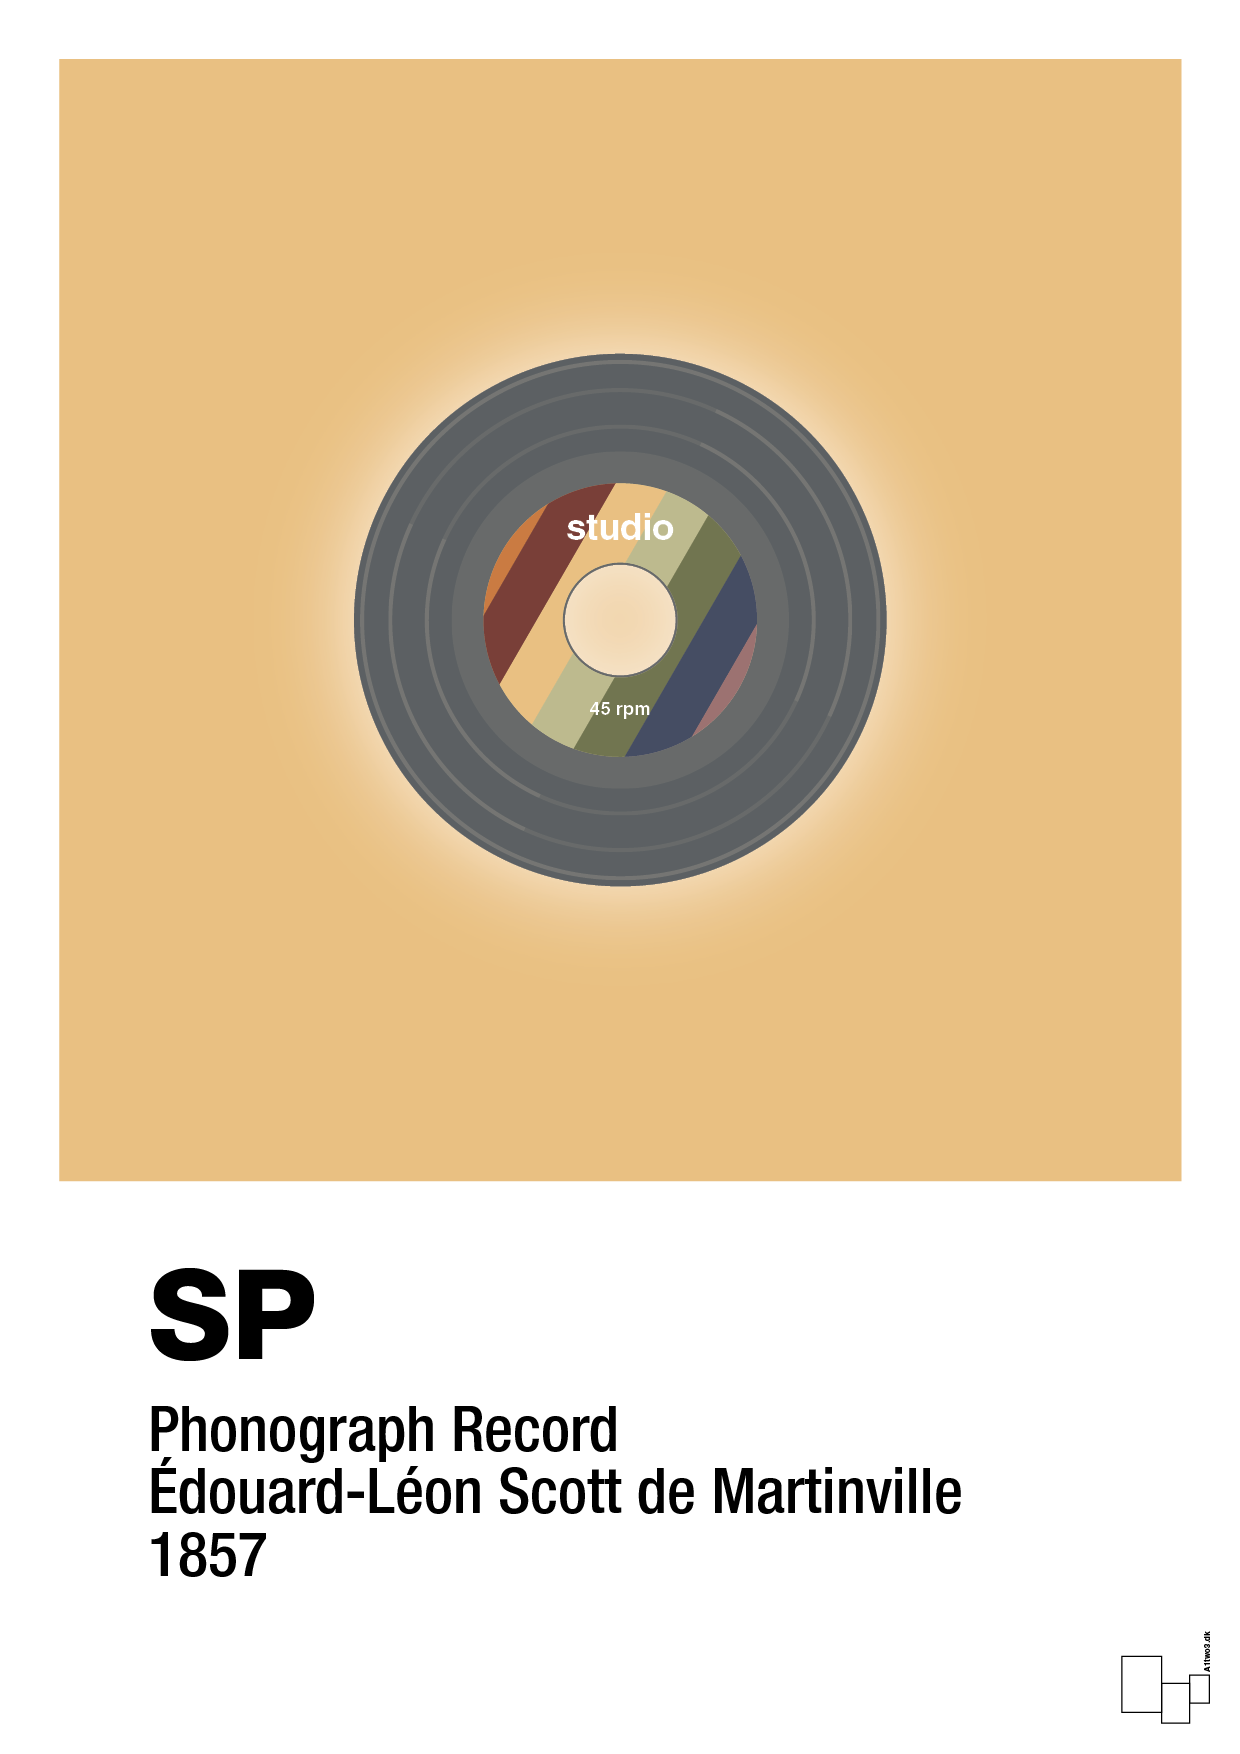 vinylplade 45rpm - Plakat med Grafik i Charismatic